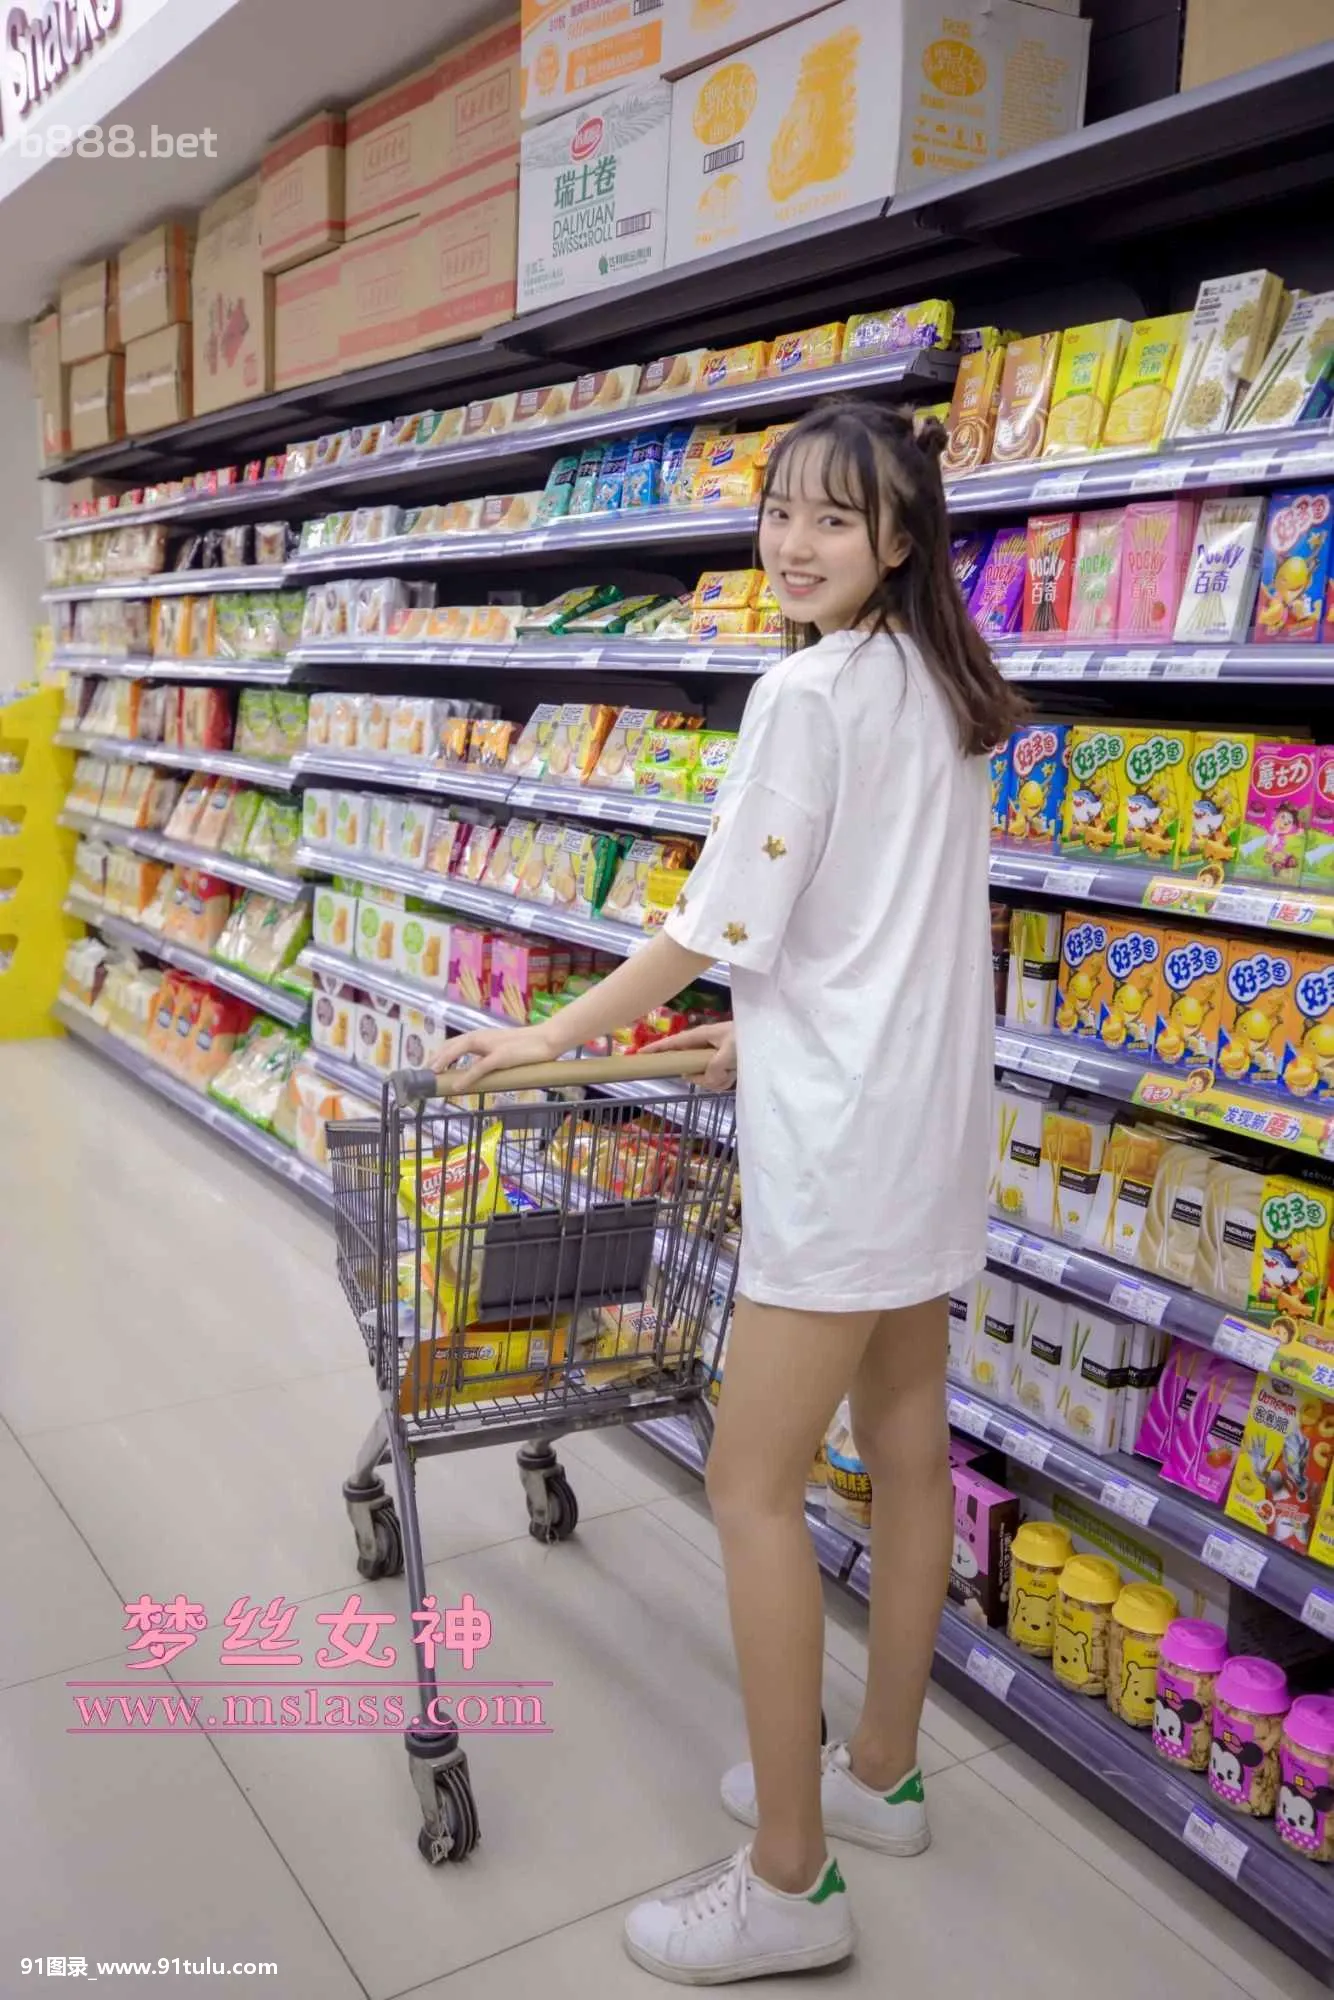 [MSLASS-梦丝女神-]-玥玥-Supermarket-Girl-[65P]MSLASS,梦丝,Supermarket,Girl,65P,女神,女神